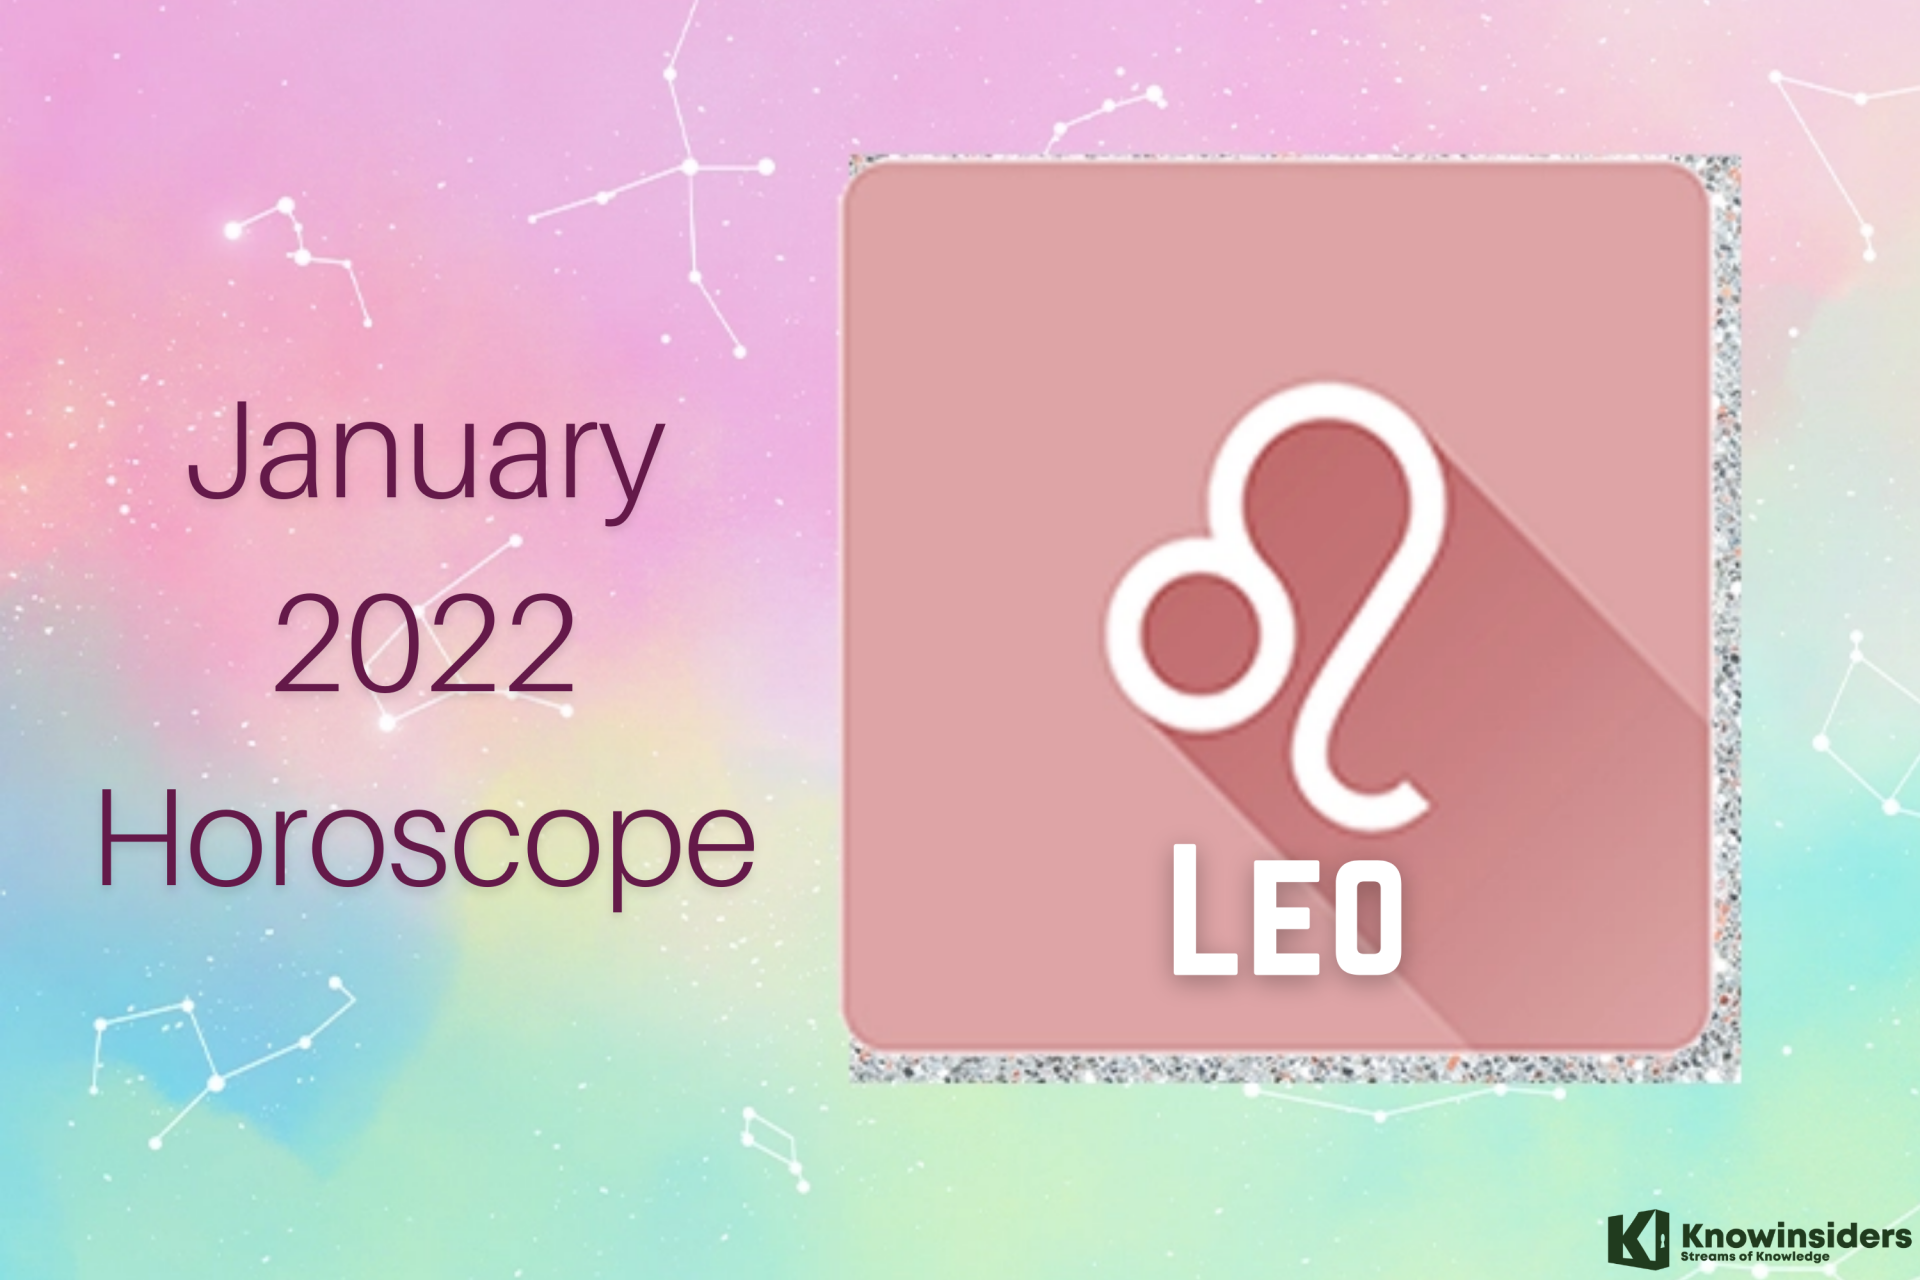 LEO January 2022 Horoscope: Prediction for Love, Career, Money